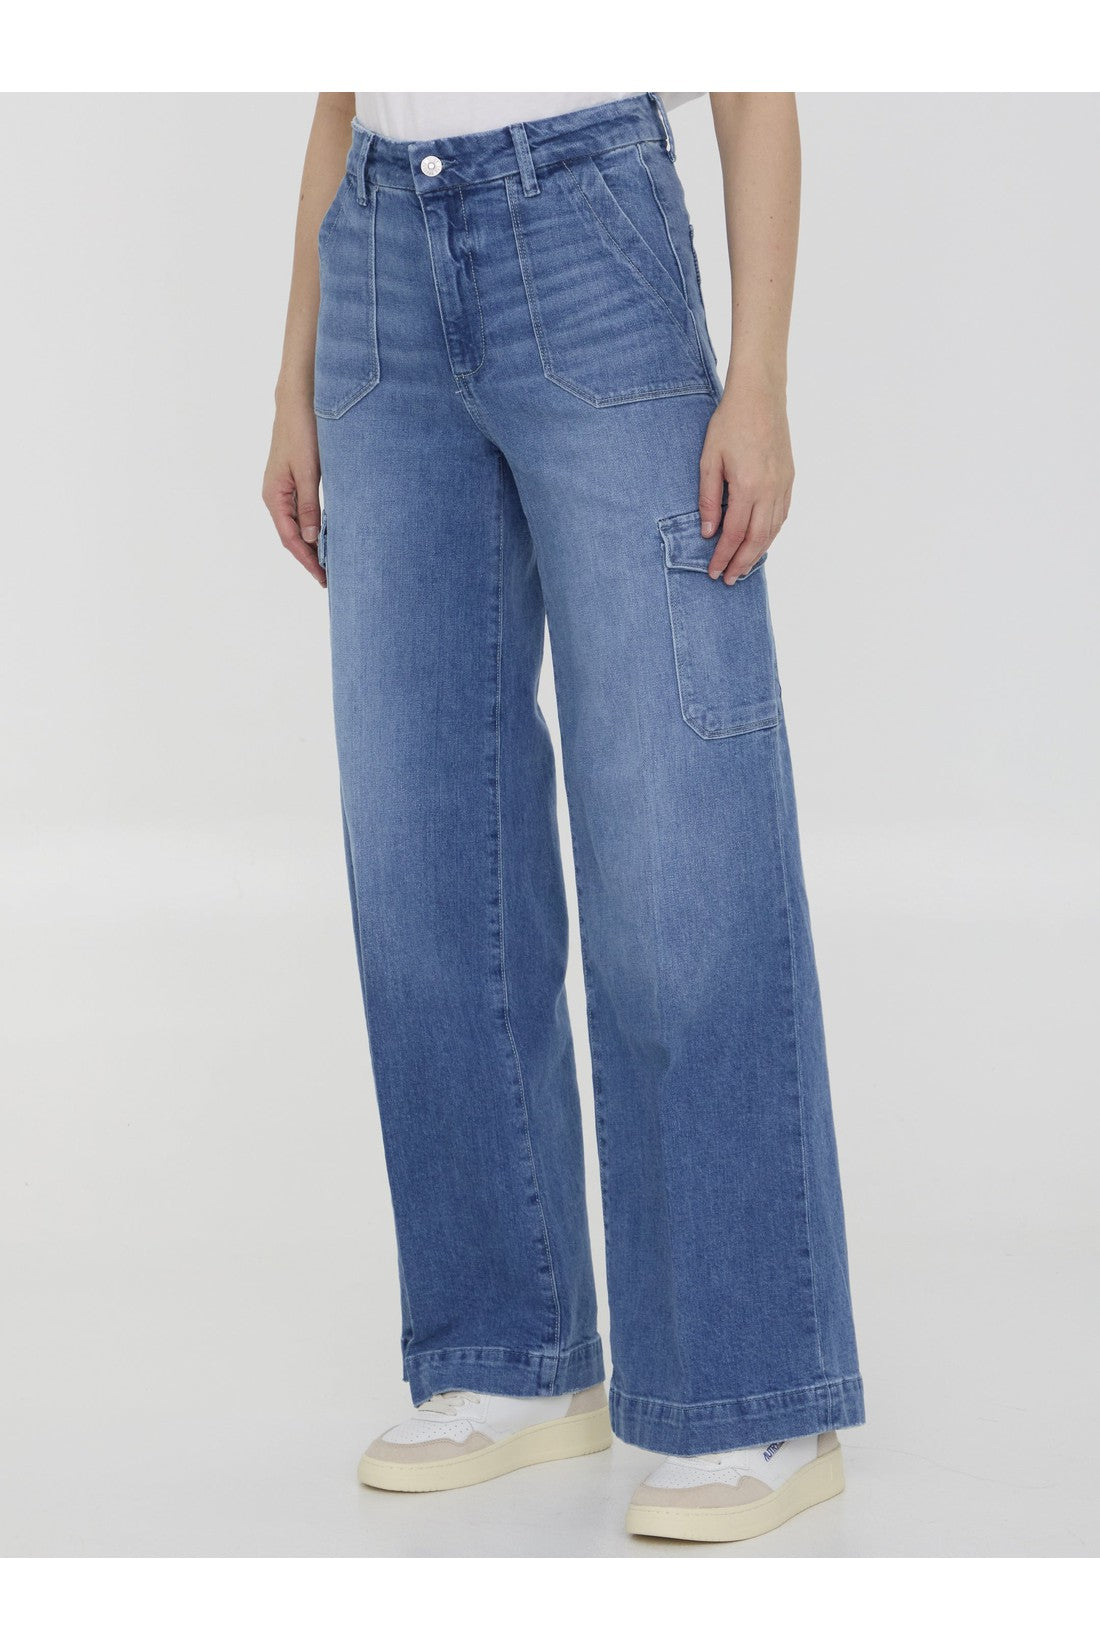 Harper jeans